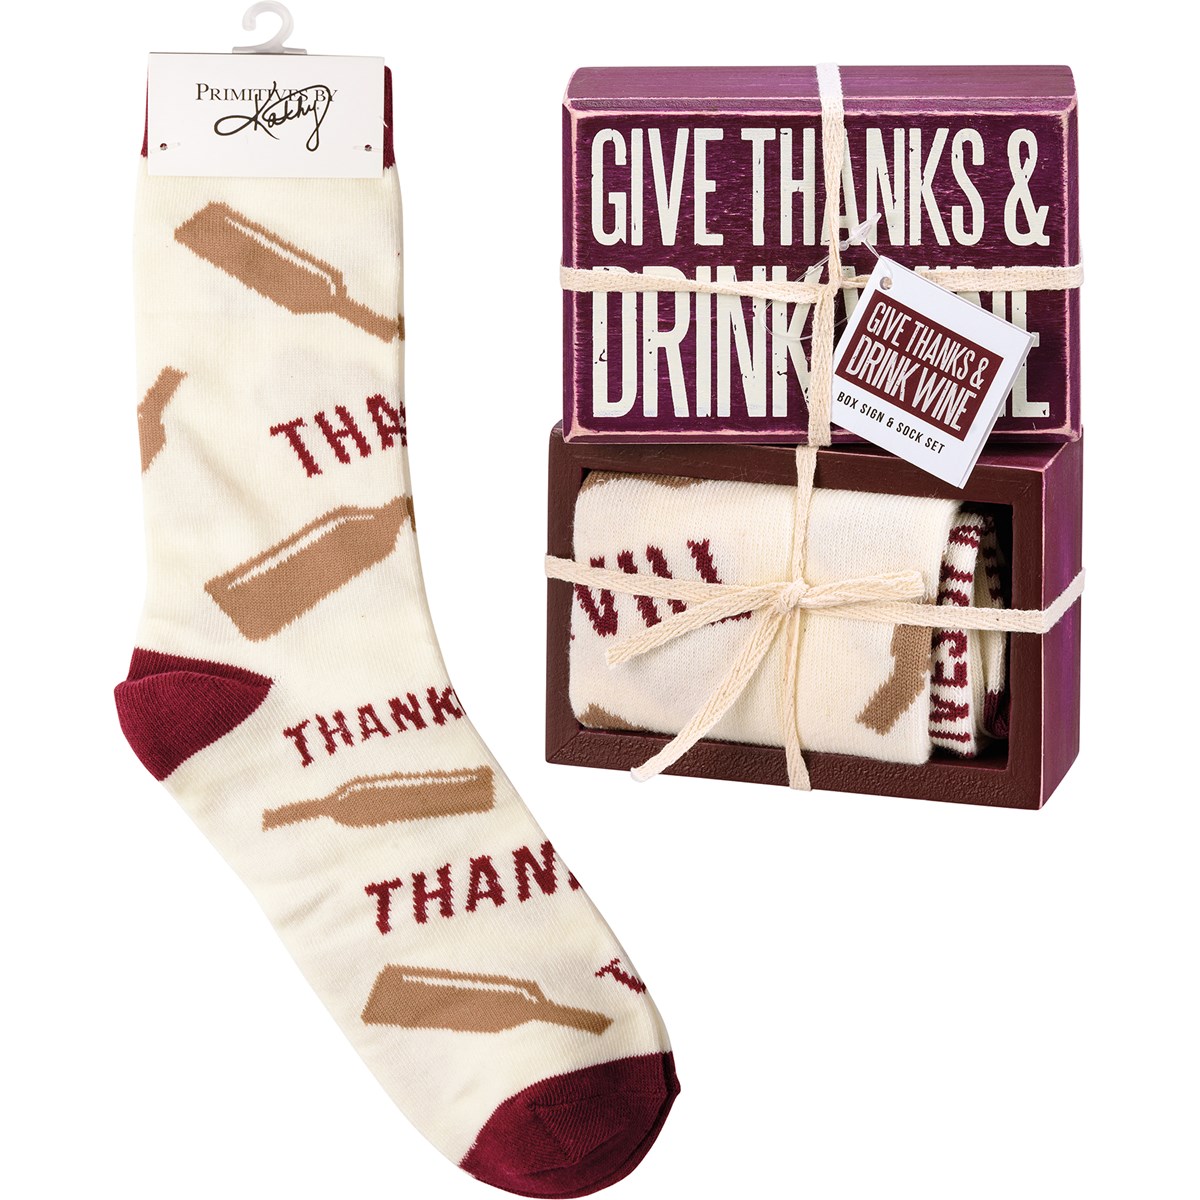 Give Thanks & Drink Wine Box Sign And Sock Set - Wood, Cotton, Nylon, Spandex, Ribbon